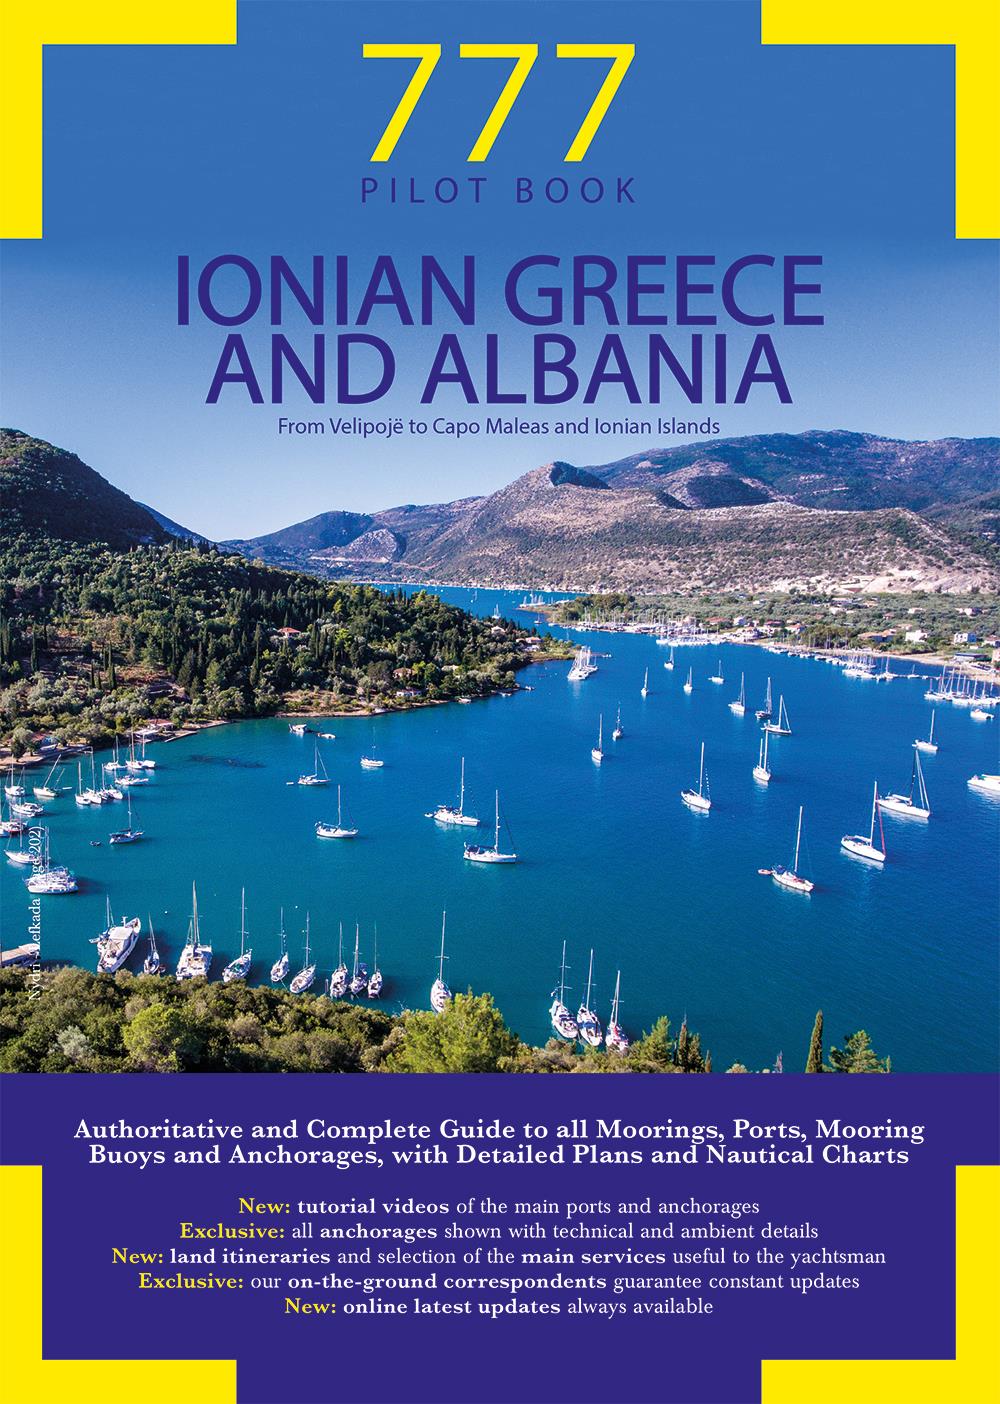 777 Pilot book Ionian Greece and Albania